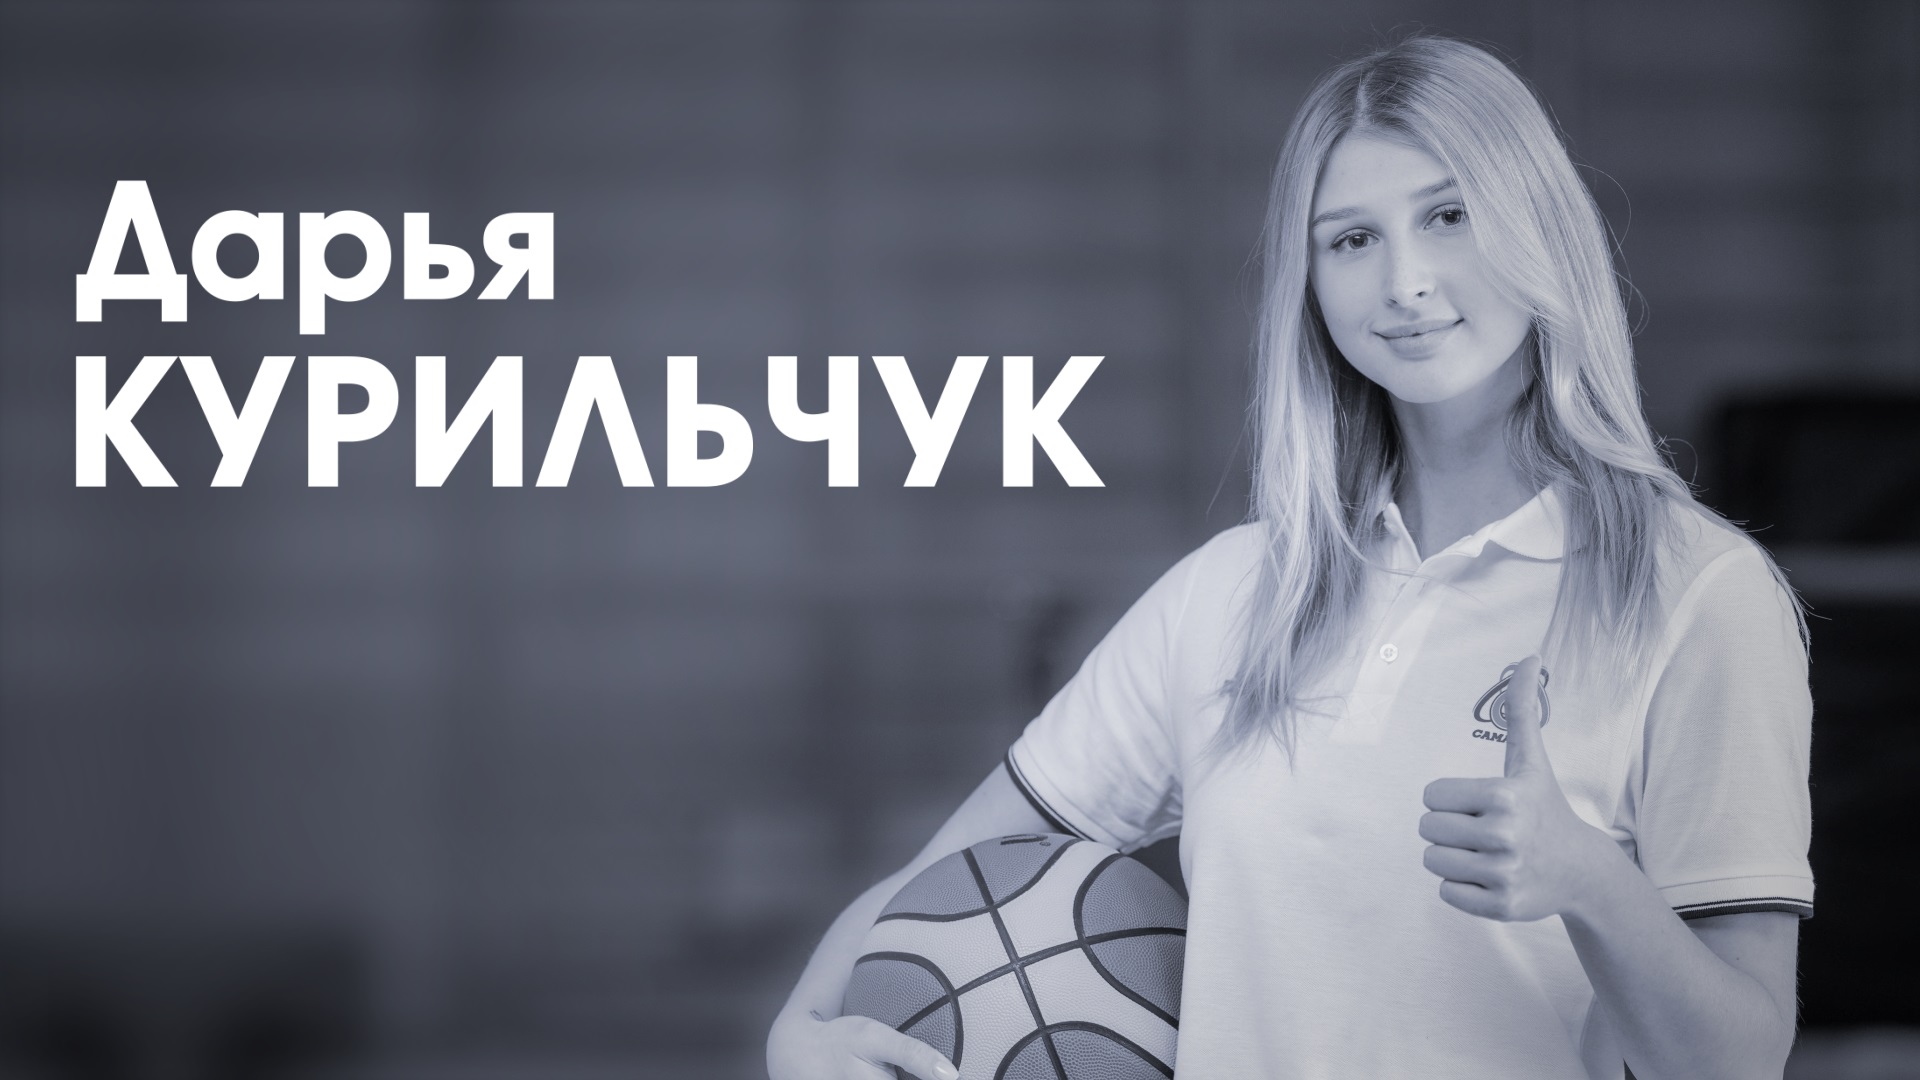 Дарья Курильчук. Мастер спорта России по баскетболу